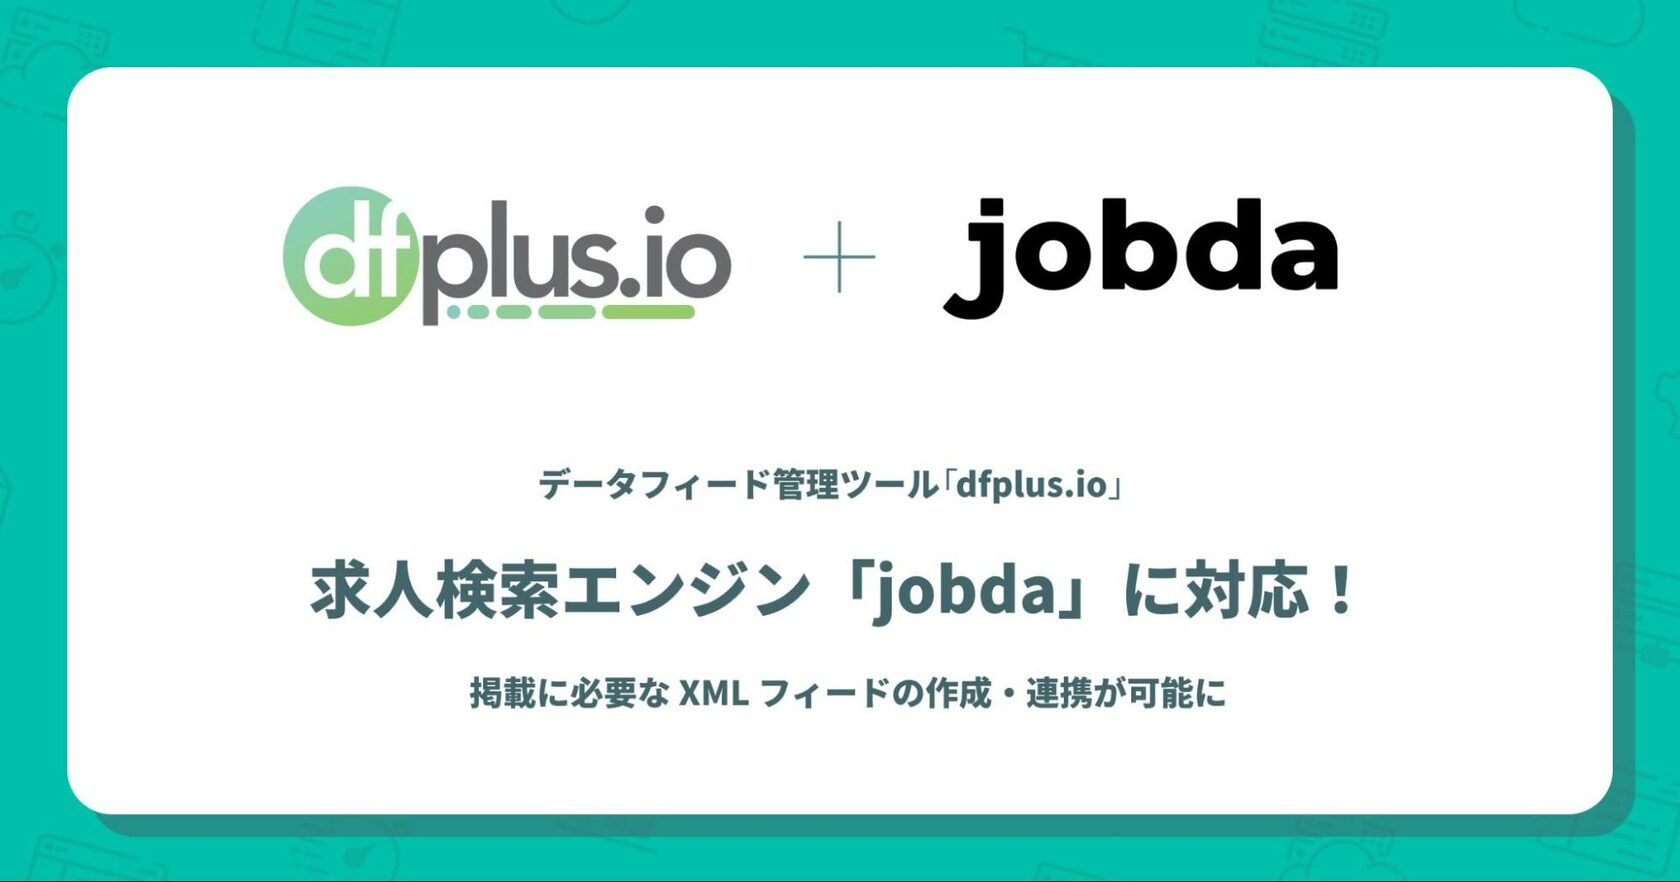 「dfplus.io」、商品データ管理ツールとして求人検索エンジン「jobda」に対応